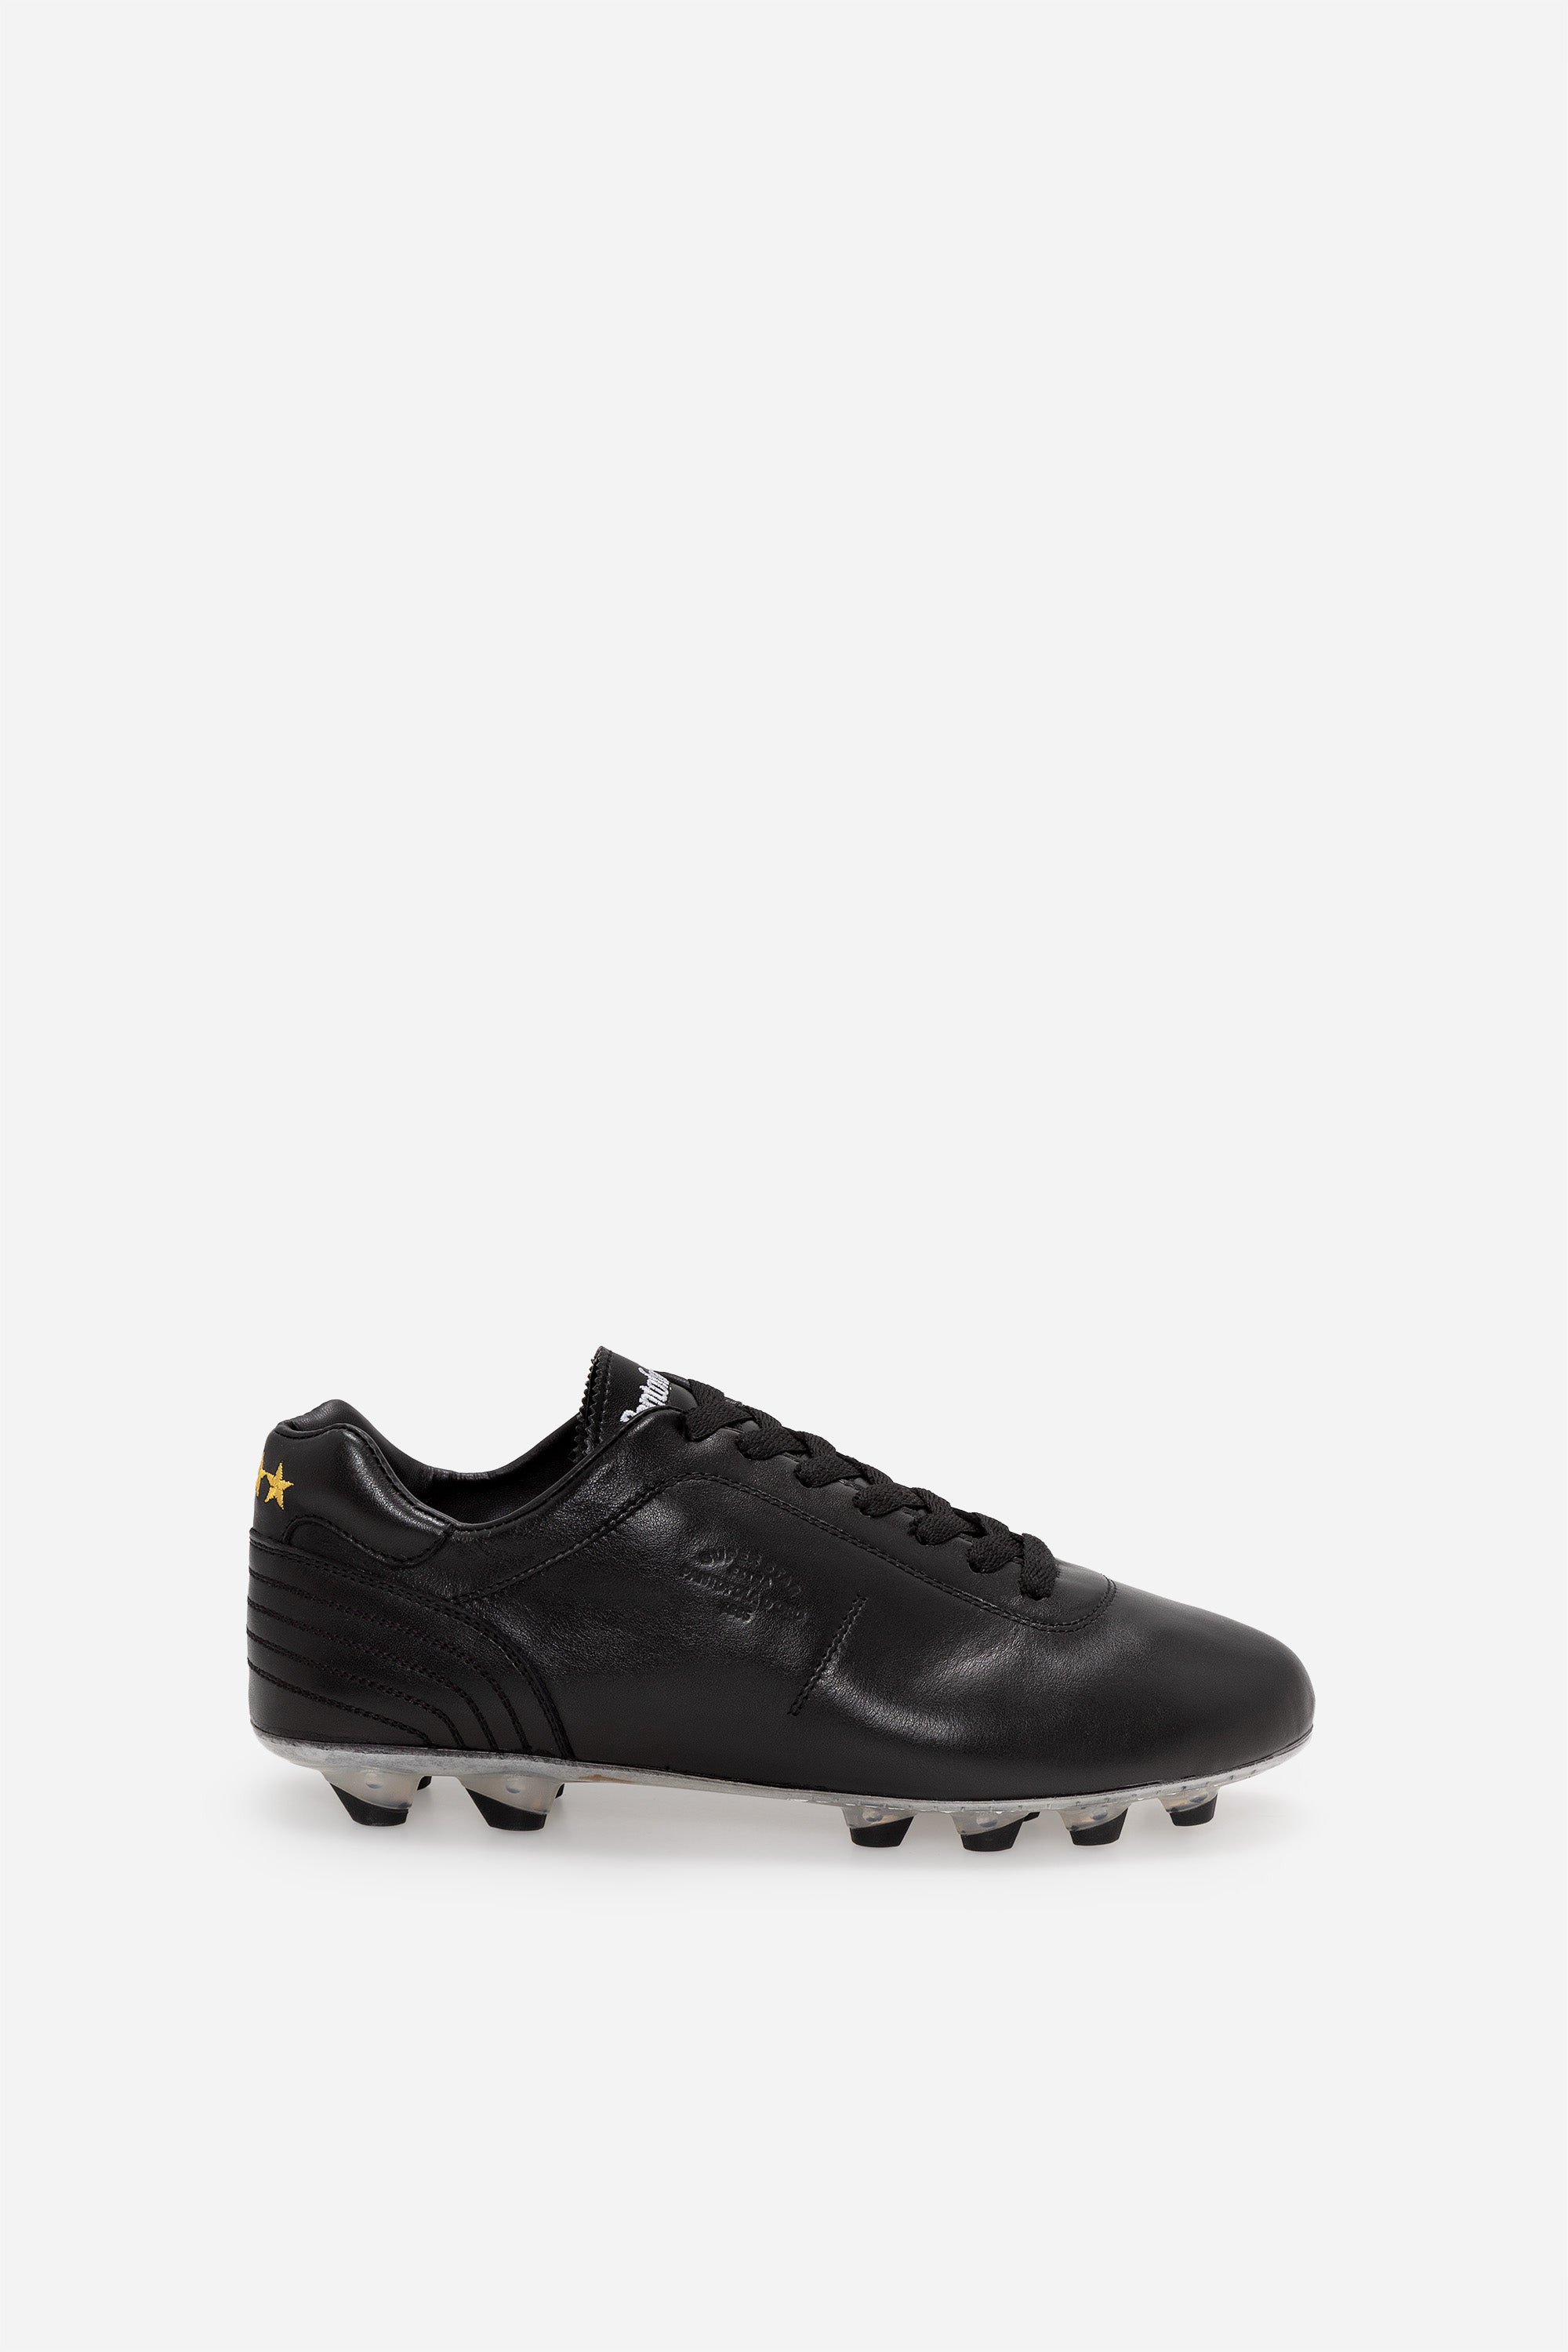 Pantofola d'Oro Lazzarini 2.0 Leather Football Boot